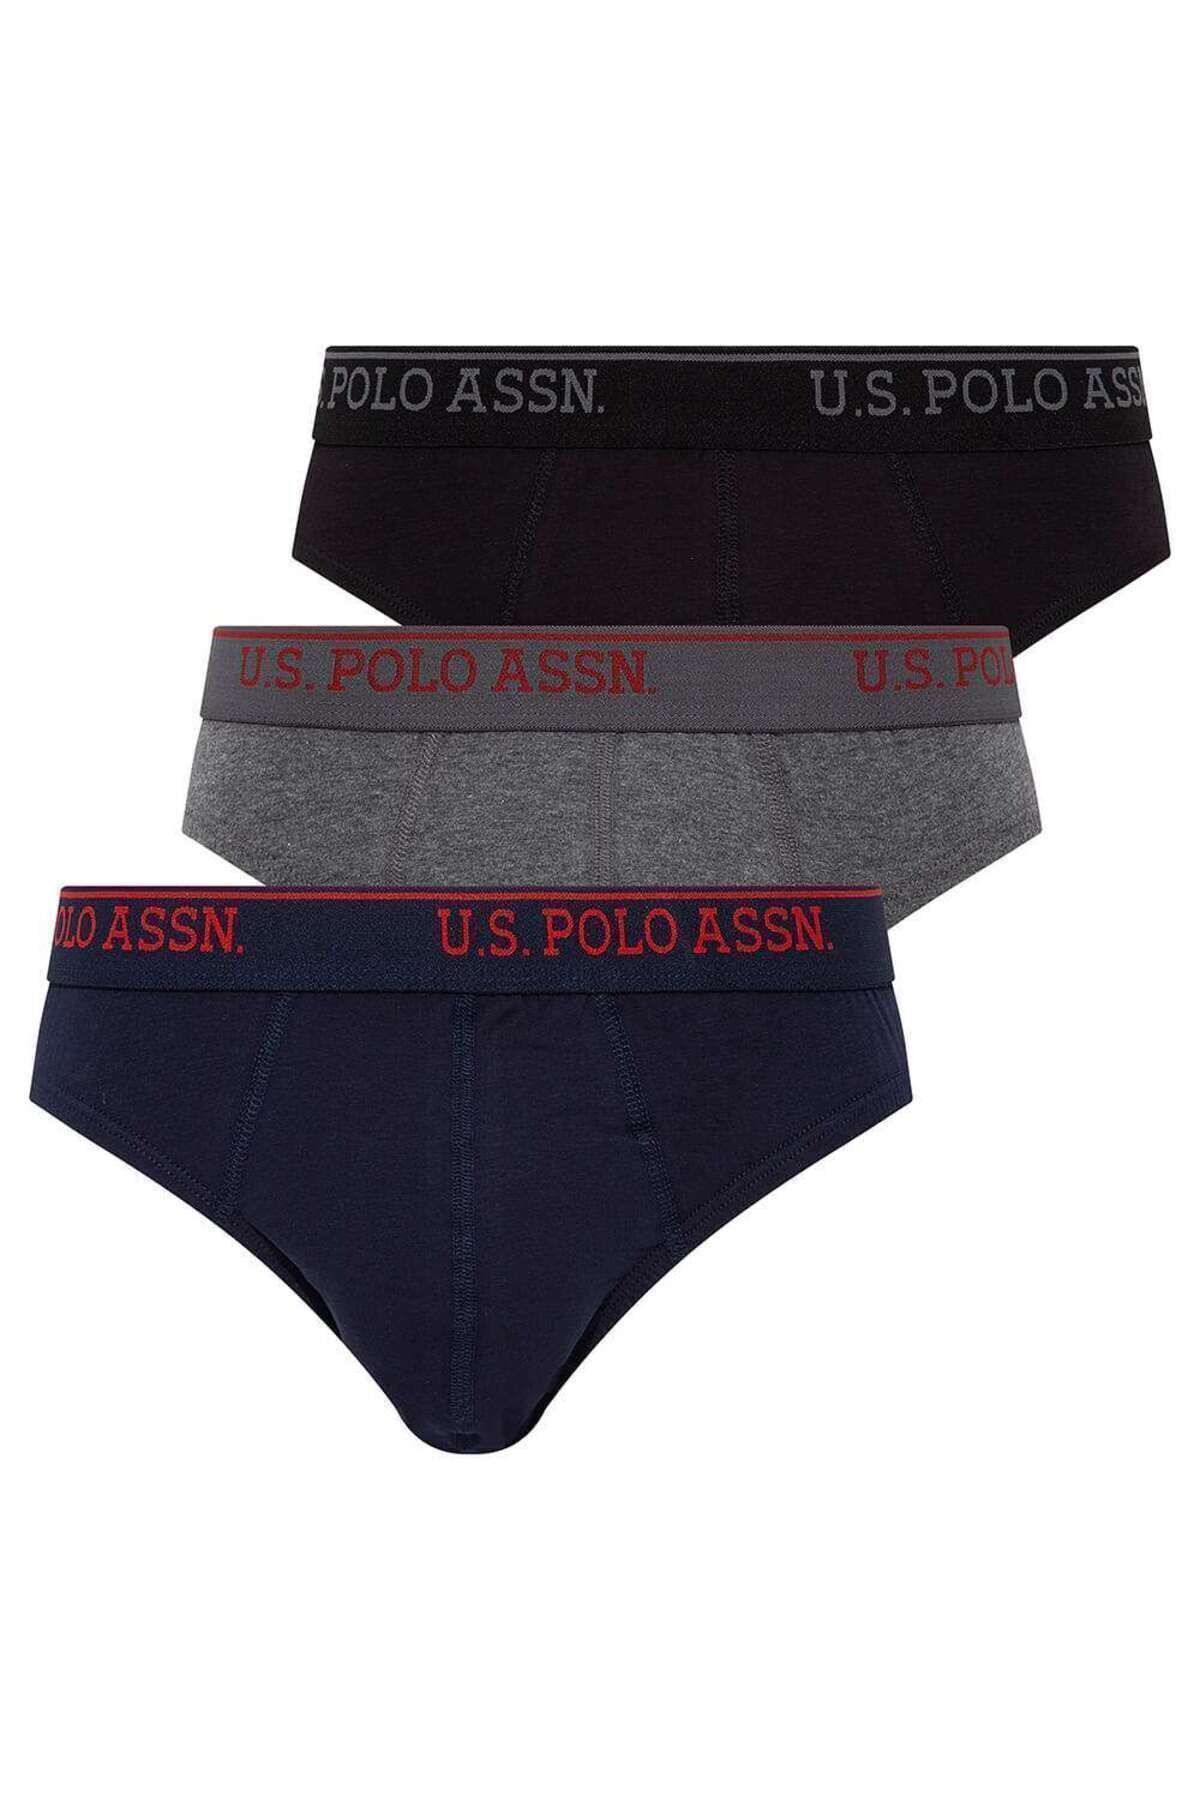 U.S. Polo Assn. U.S. Polo Assn. Erkek Siyah - Antrasit Melanj - Lacivert 3 Lü Slip A.8S.T0.R.4APL.3.S.6